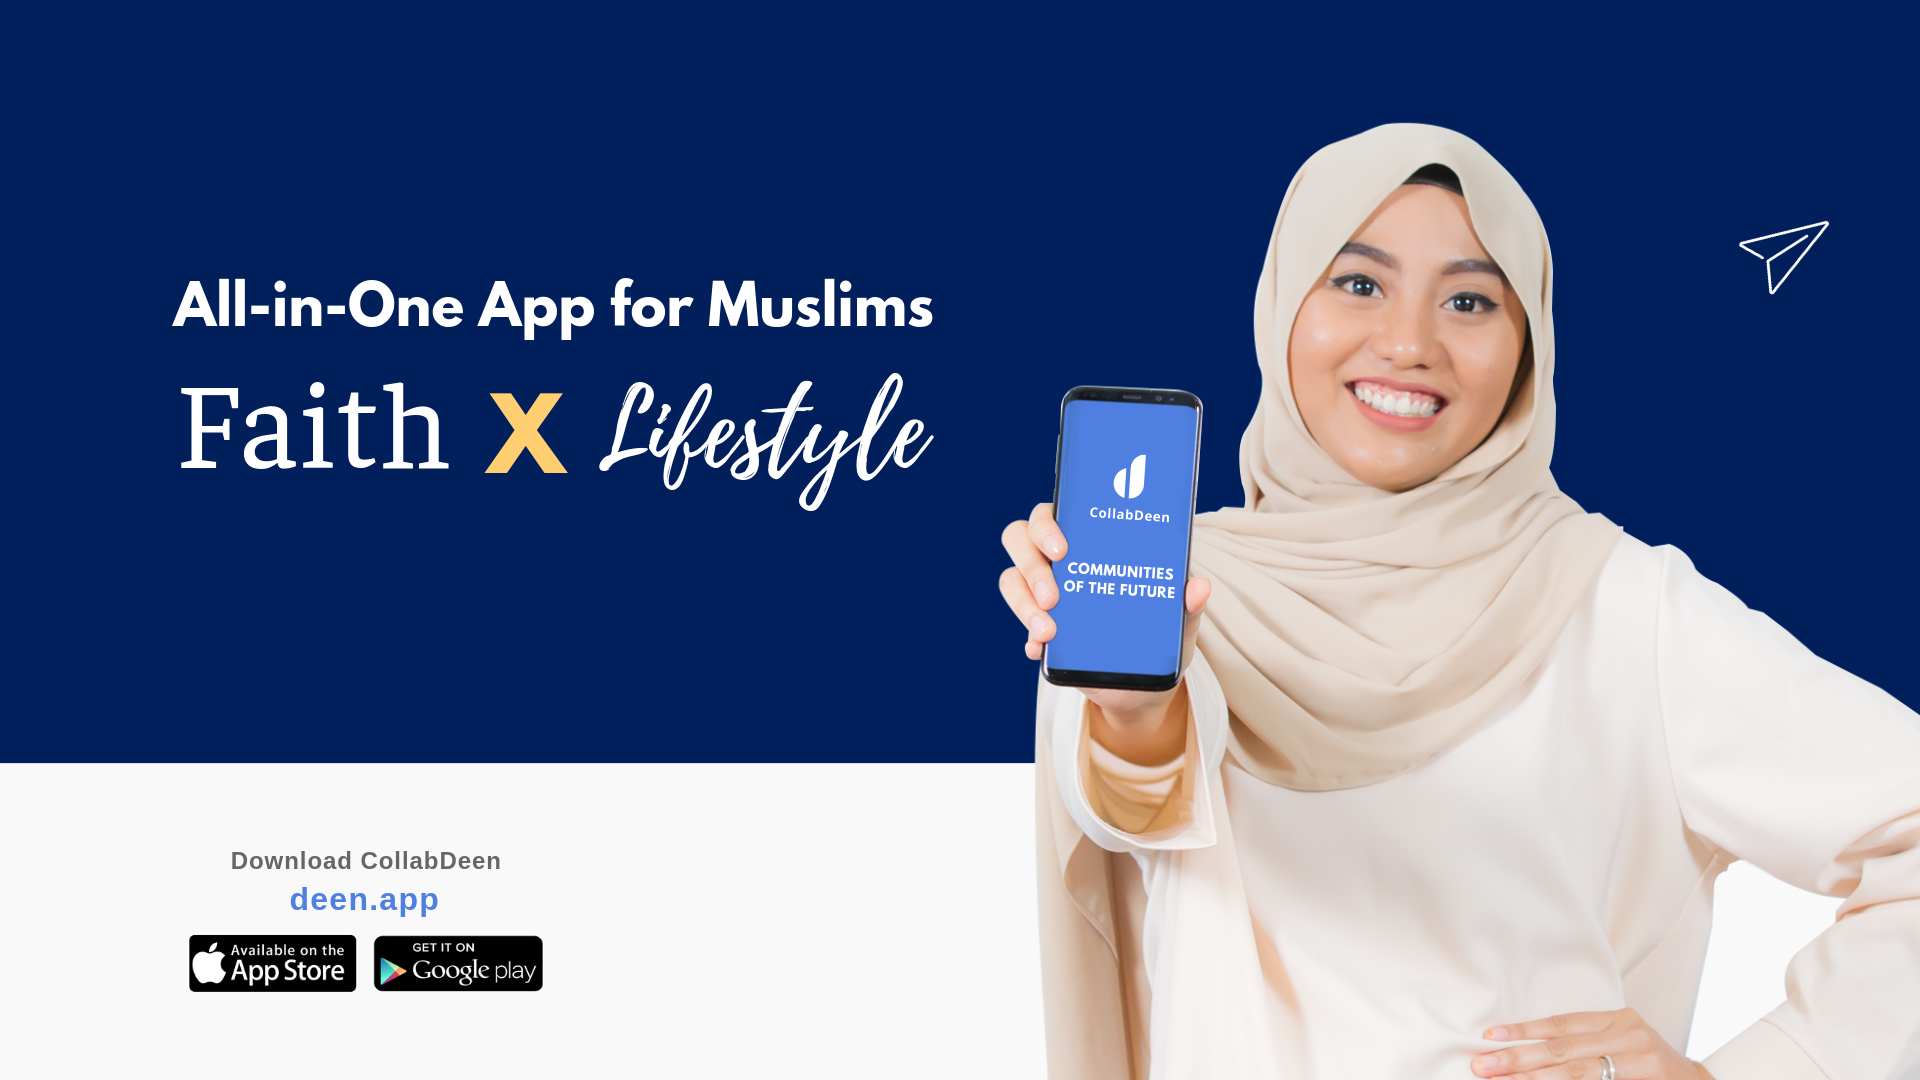 CollabDeen Islamic Economy App